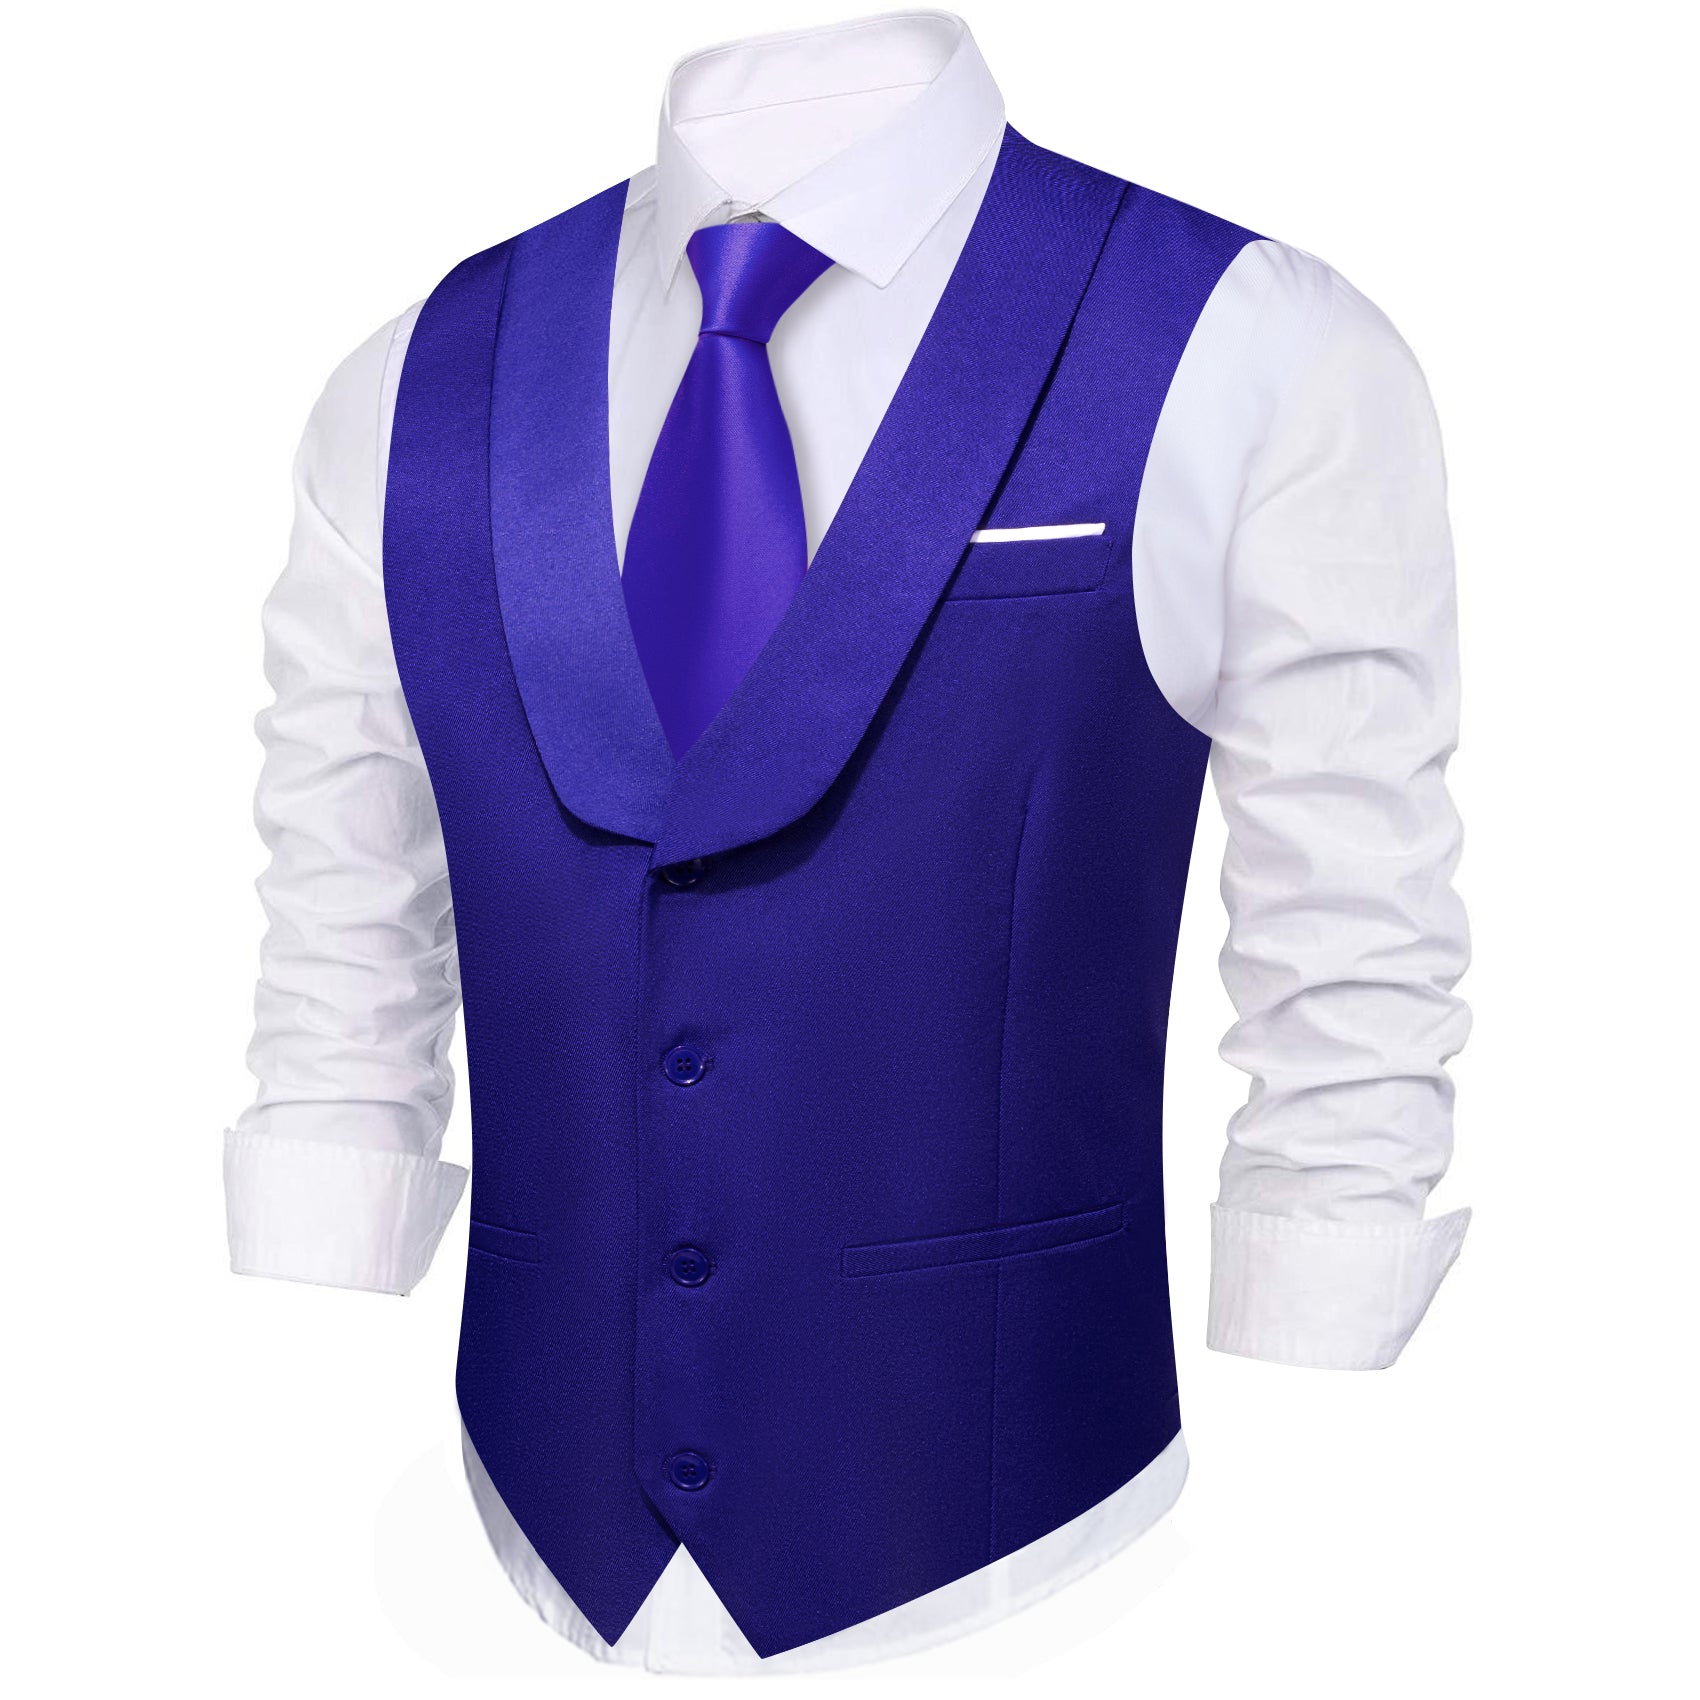 Barry.wang Novetly Ultra Marine Solid Vest Waistcoat Set